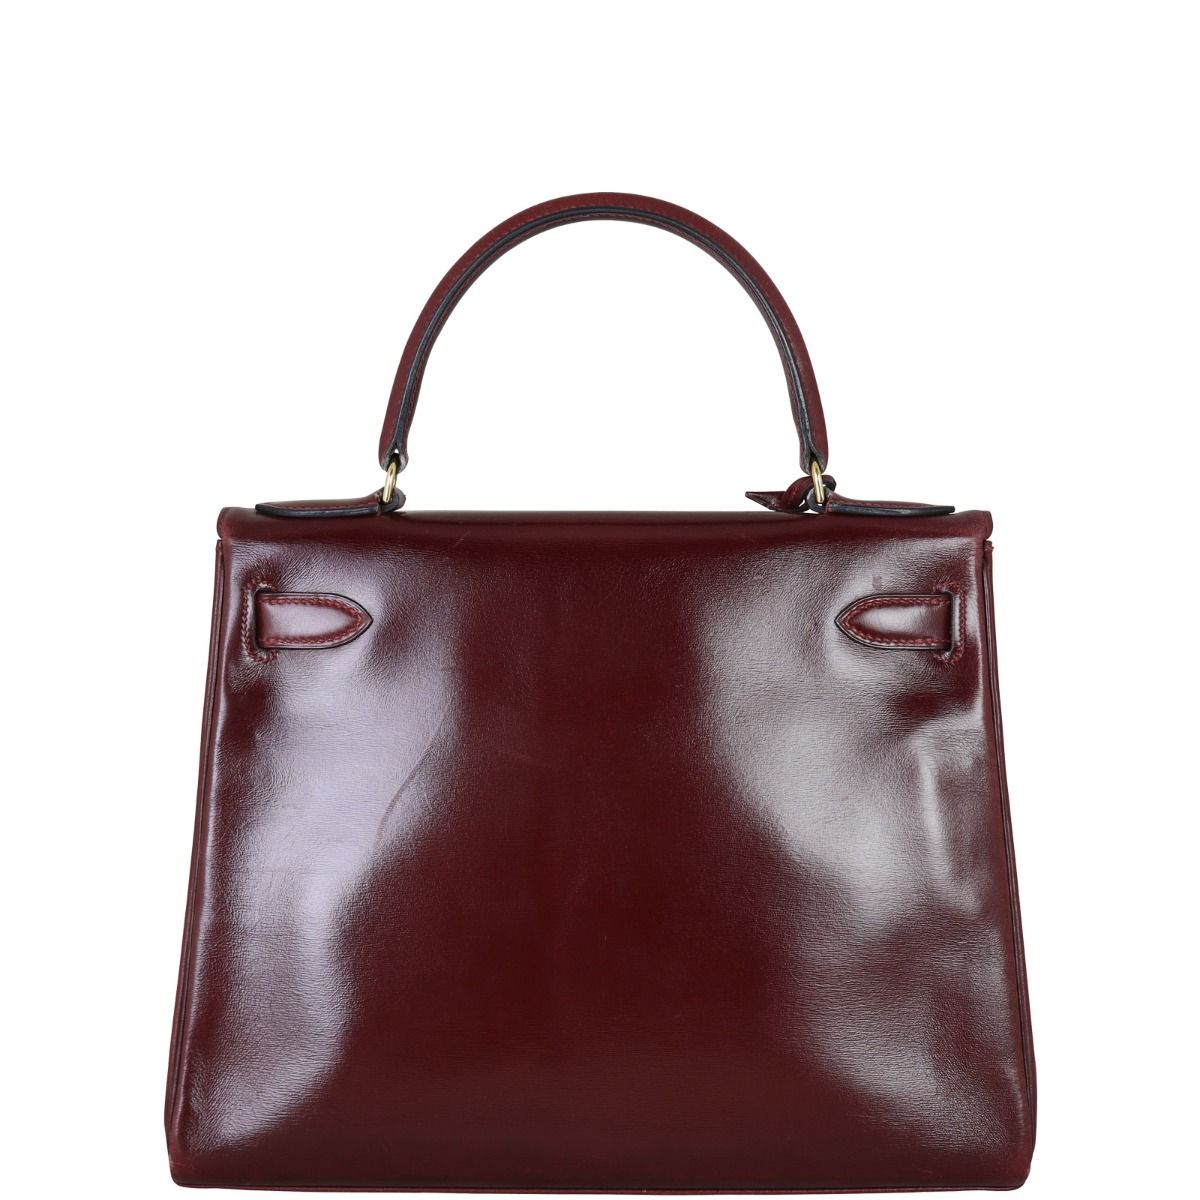 28 Kelly Retourne Bag Burgundy Box Leather